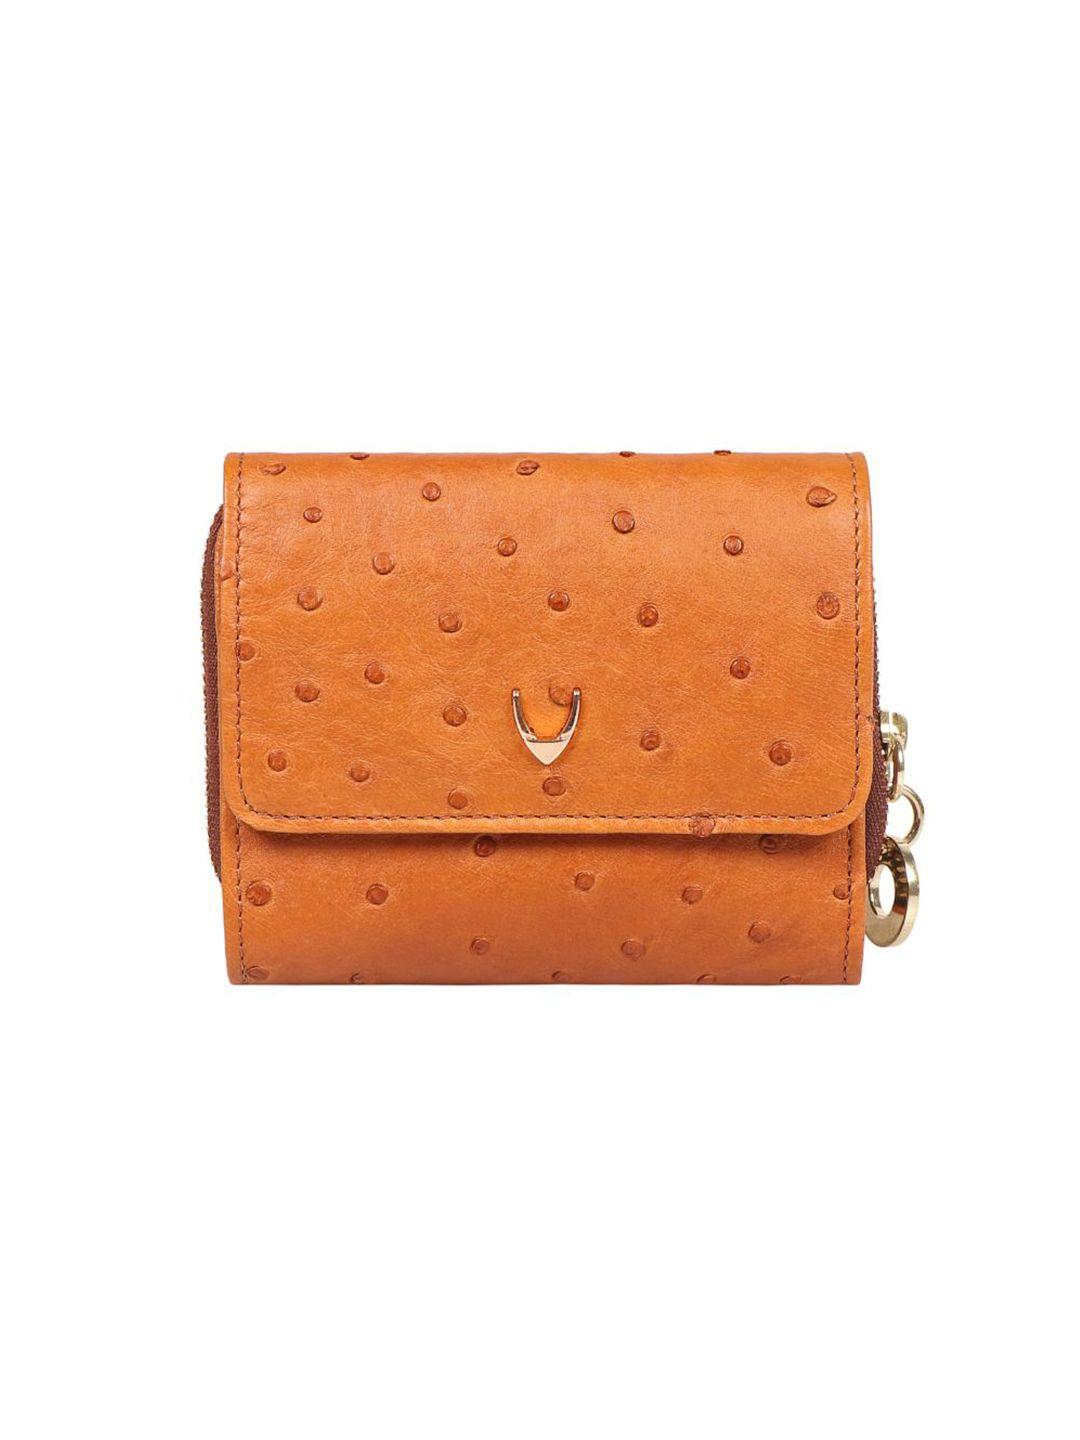 hidesign women tan geometric leather three fold wallet